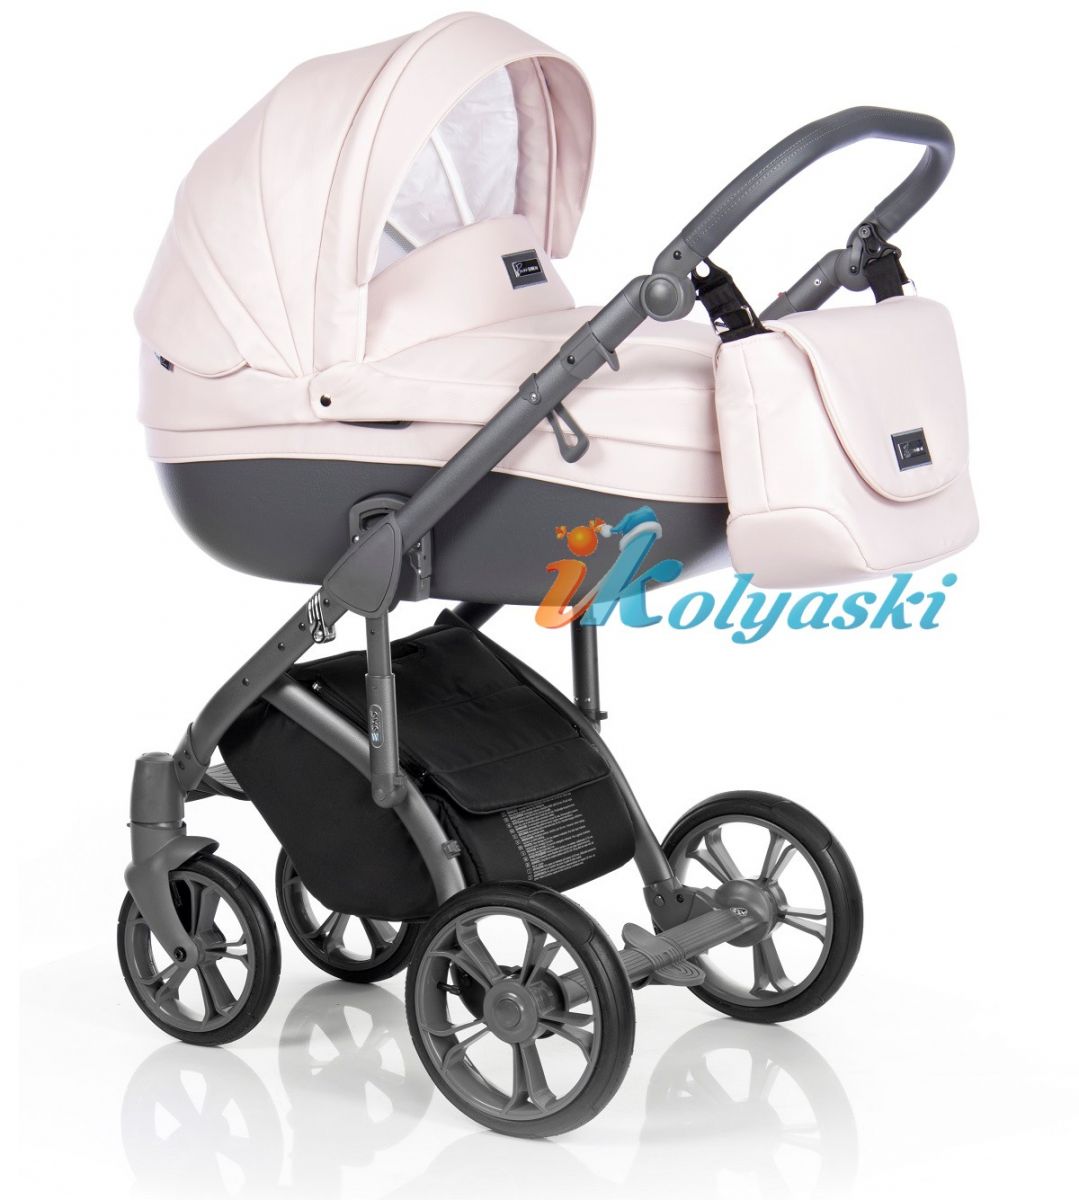 Roan Bass Soft Romantic Pink NEW Eco-Leather коляска для новорожденных новинка